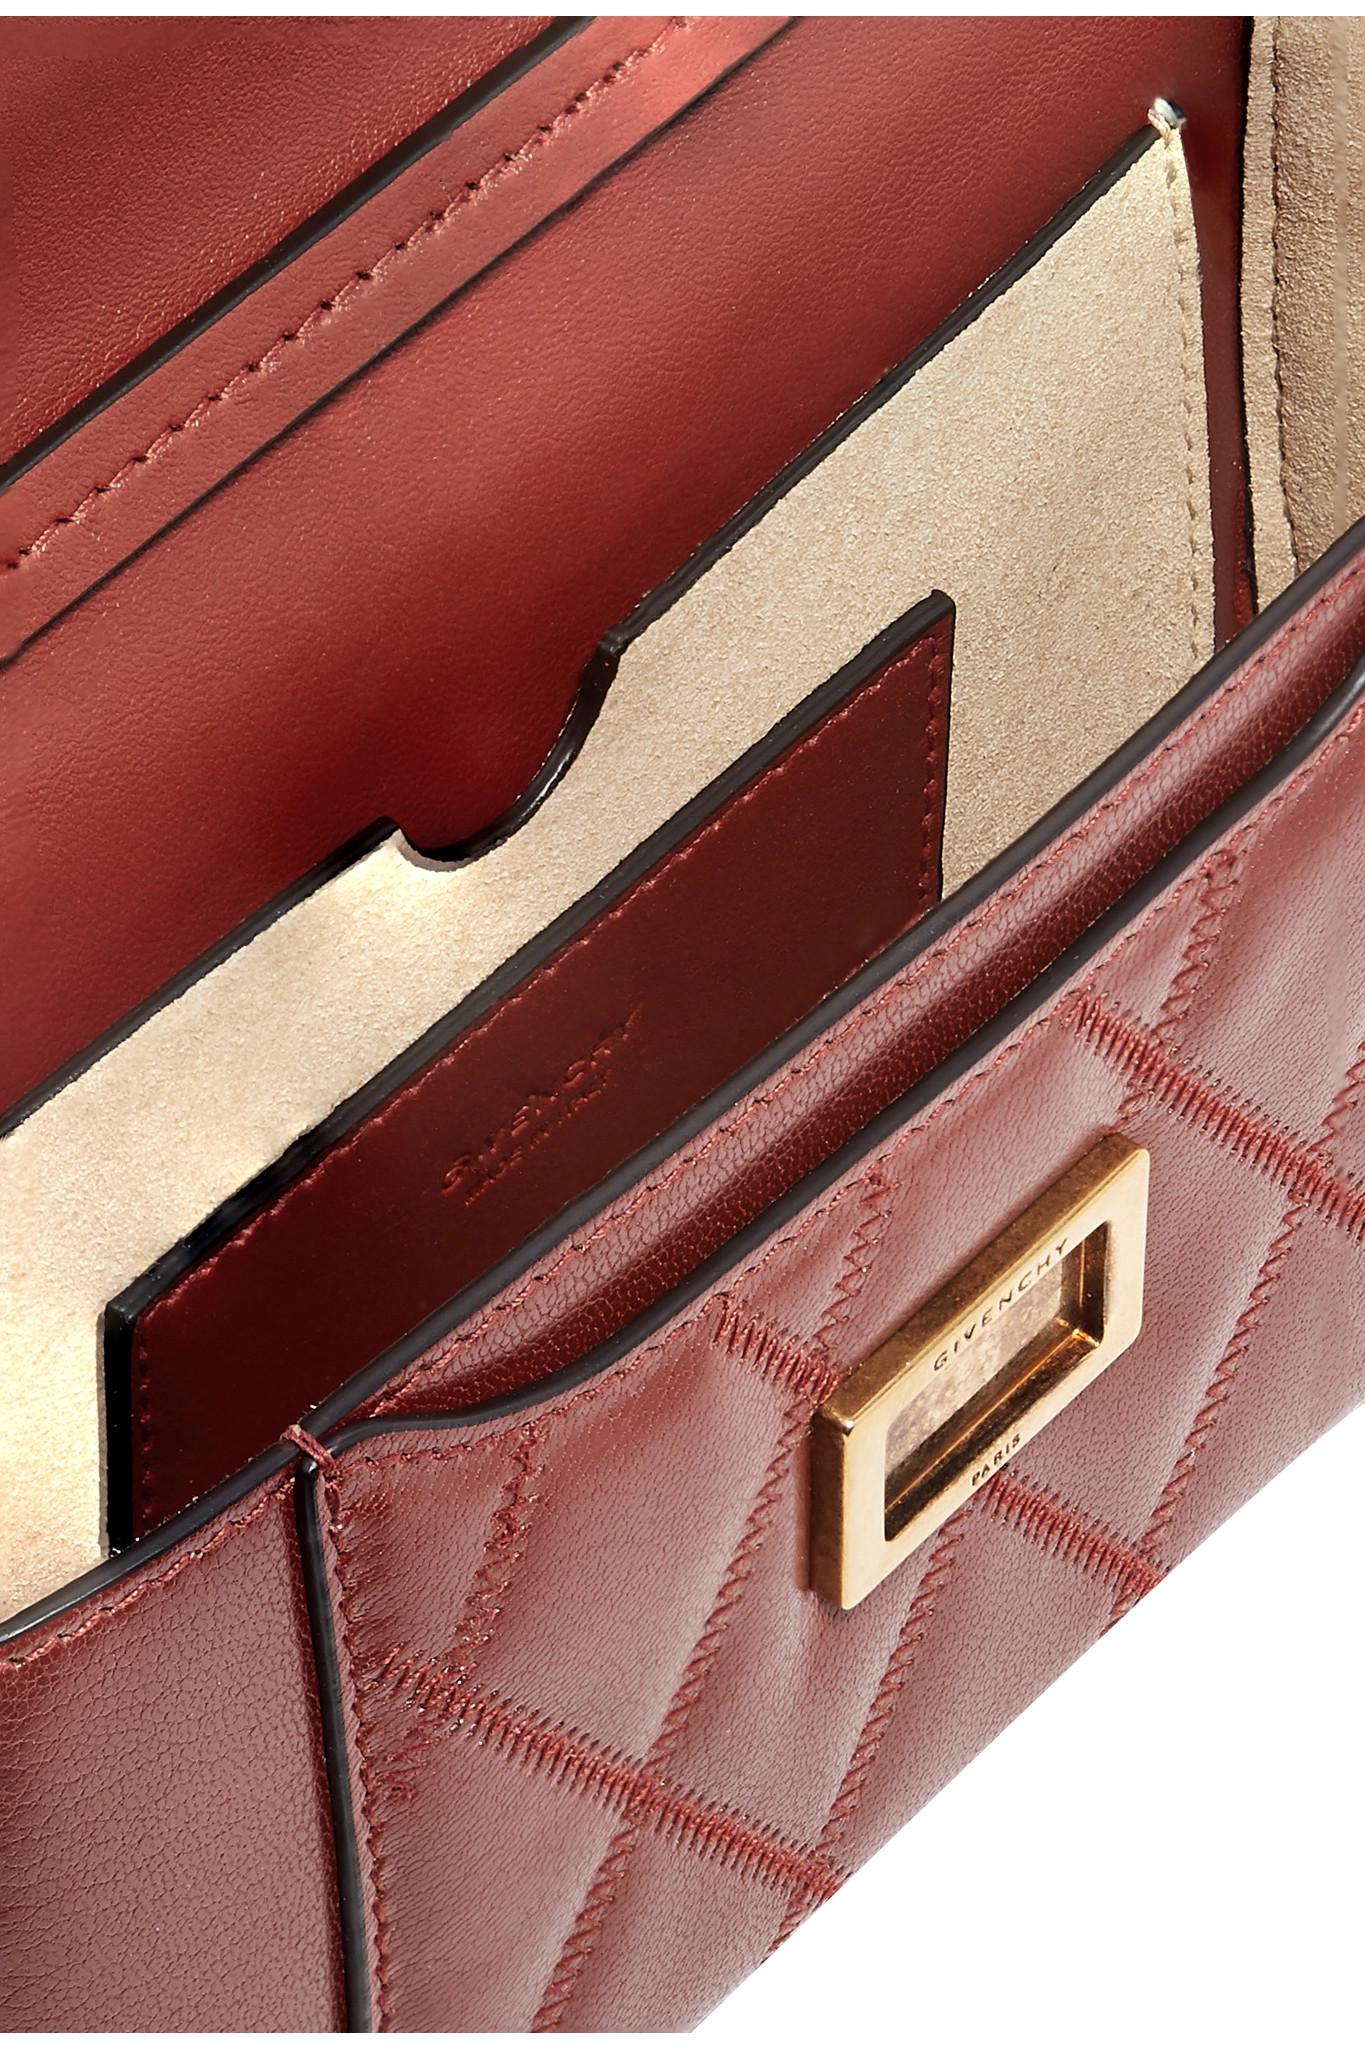 Givenchy Pocket Mini Quilted Leather Shoulder Bag - Lyst